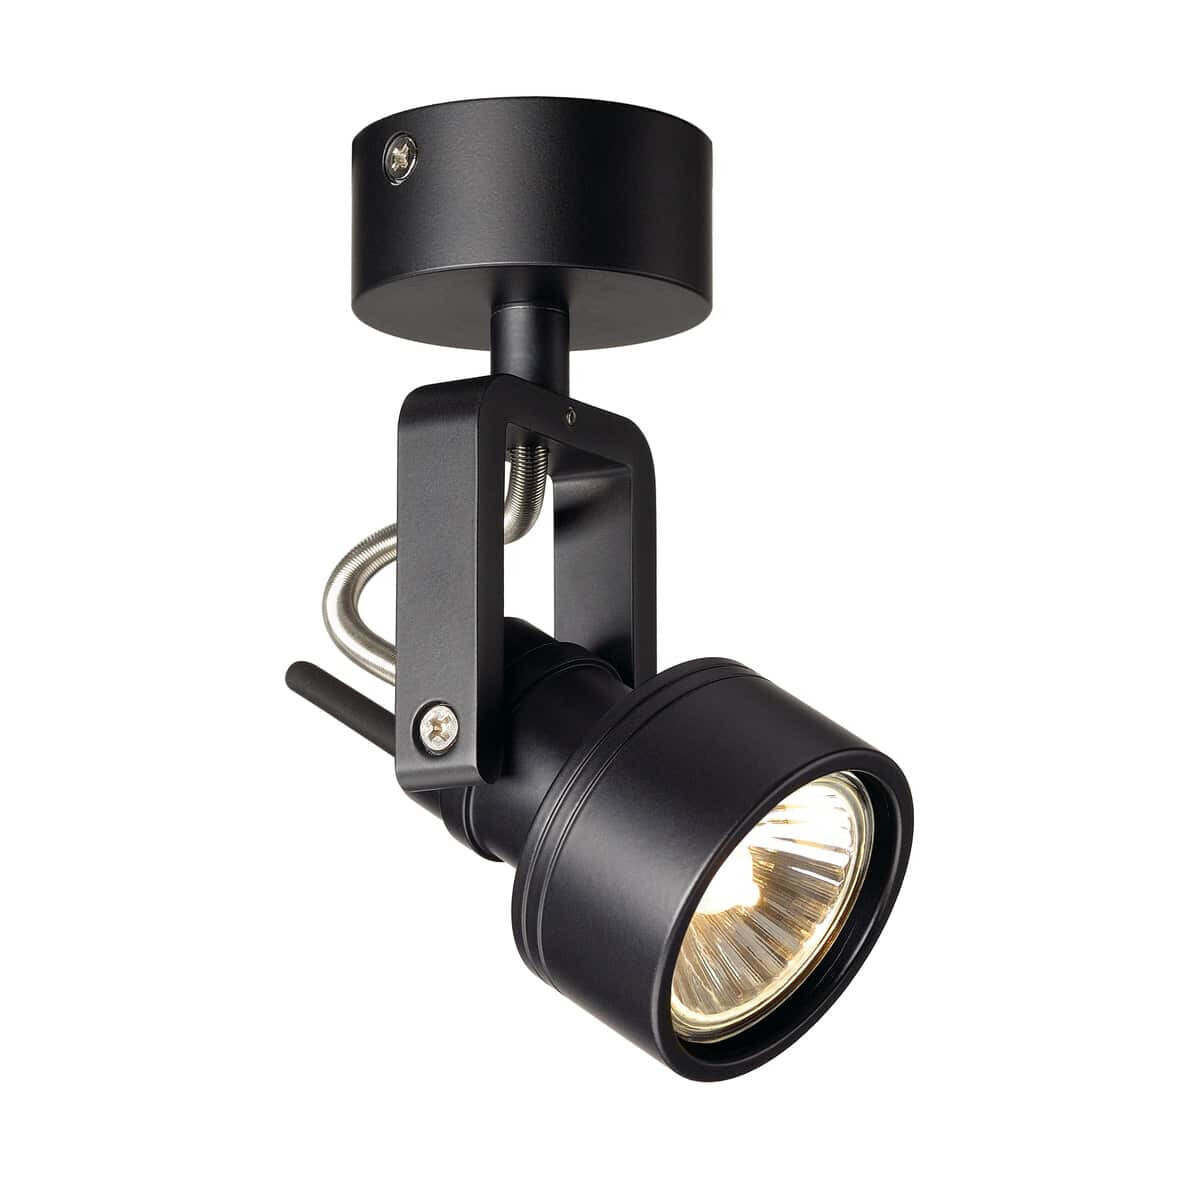 SLV Inda - Surfaced lighting spot - GU10 - 1 bulb(s) - 50 W - 220-240 V - Black